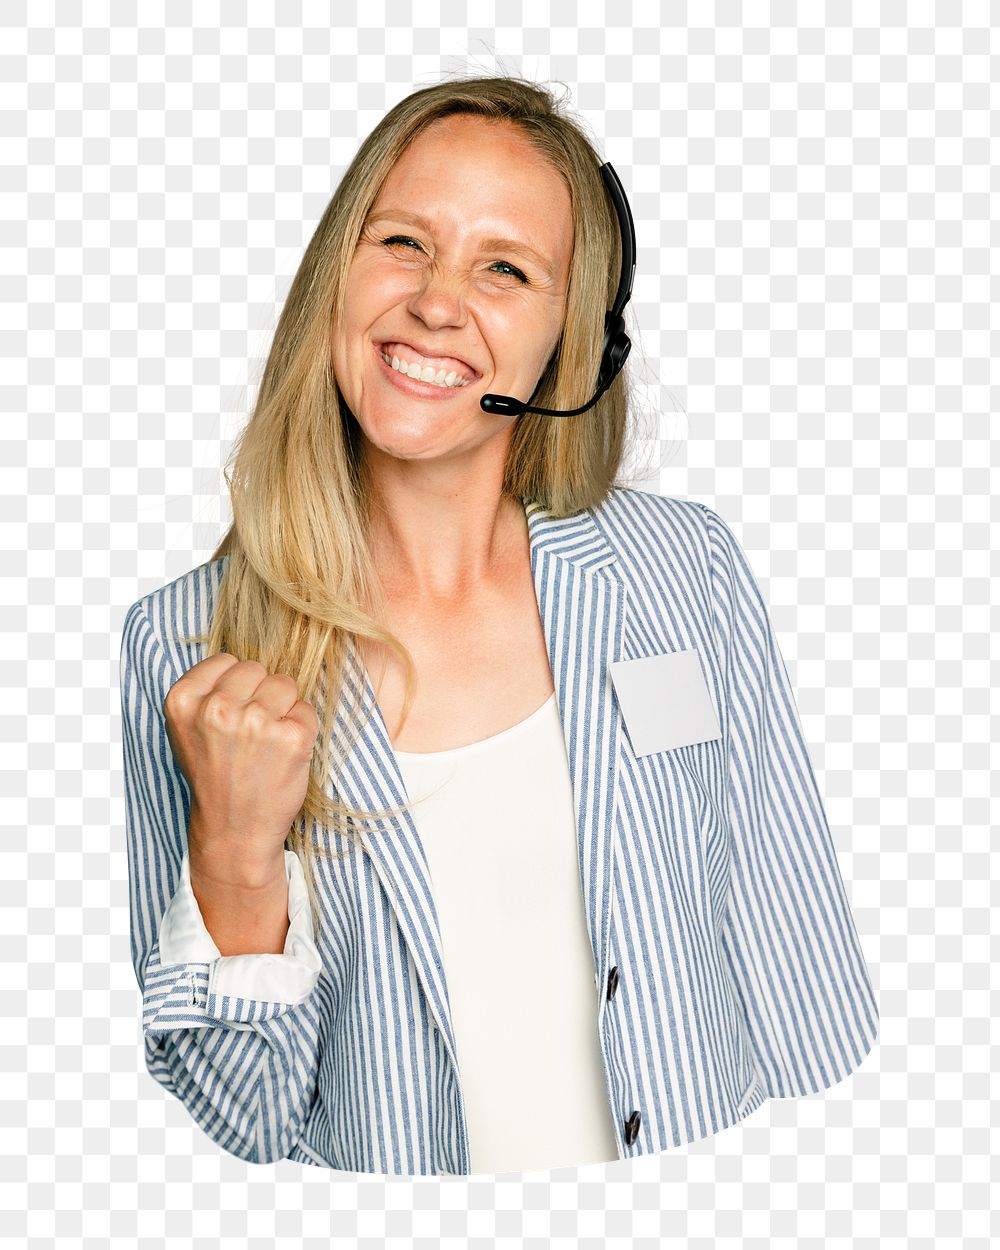 Png customer service woman sticker, transparent background